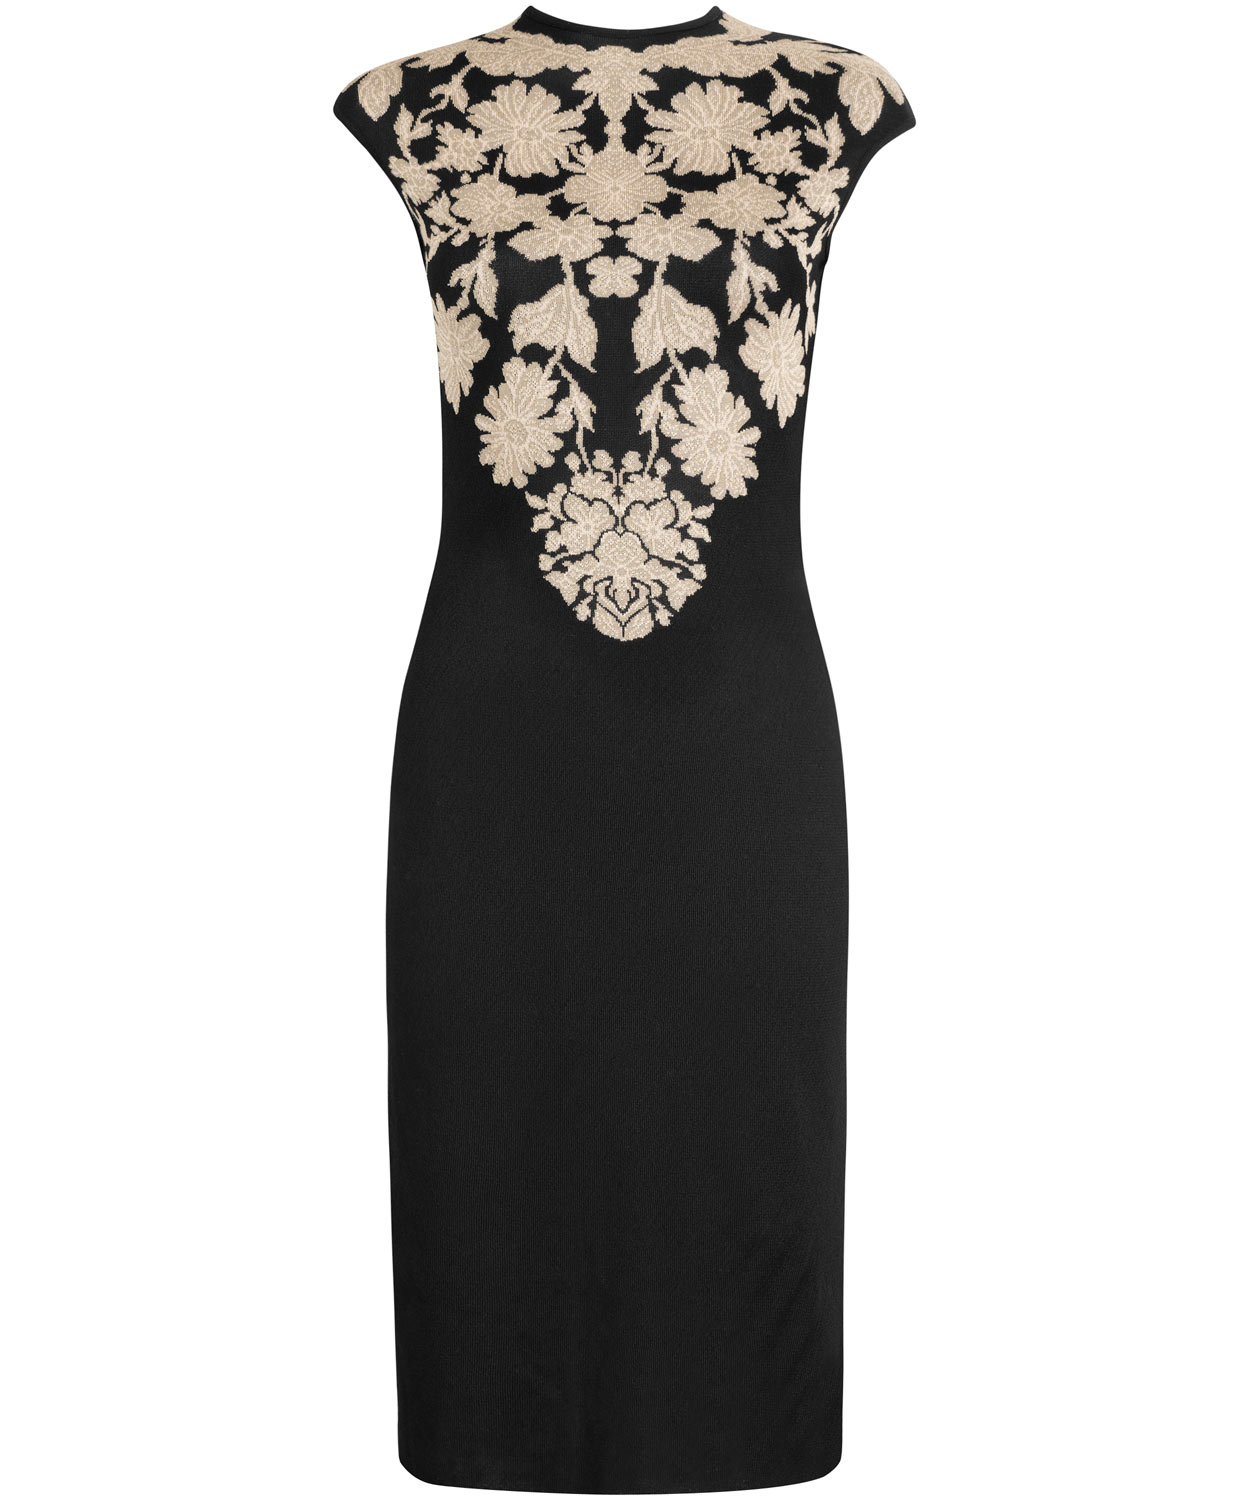 Lyst - Alexander Mcqueen Floral Print Dress in Black